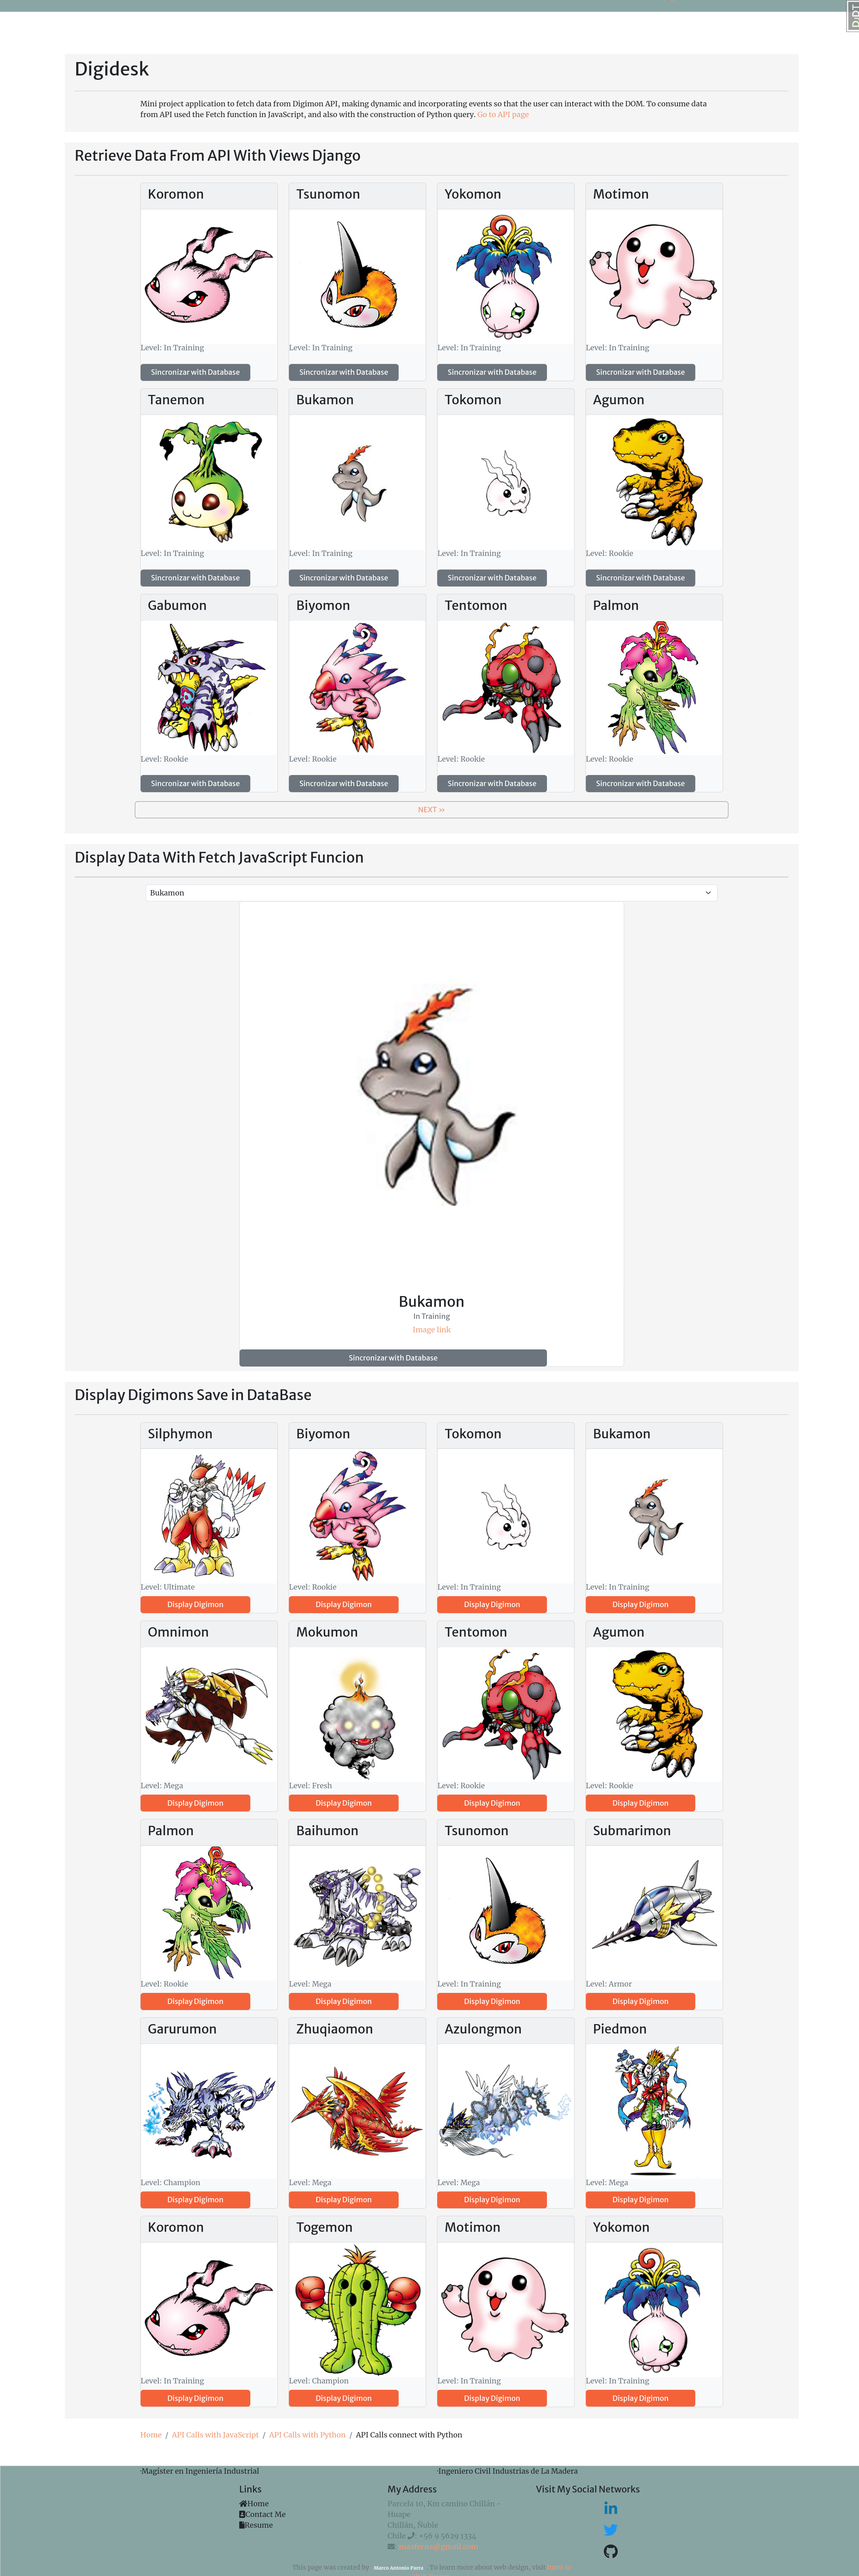 Digimon API